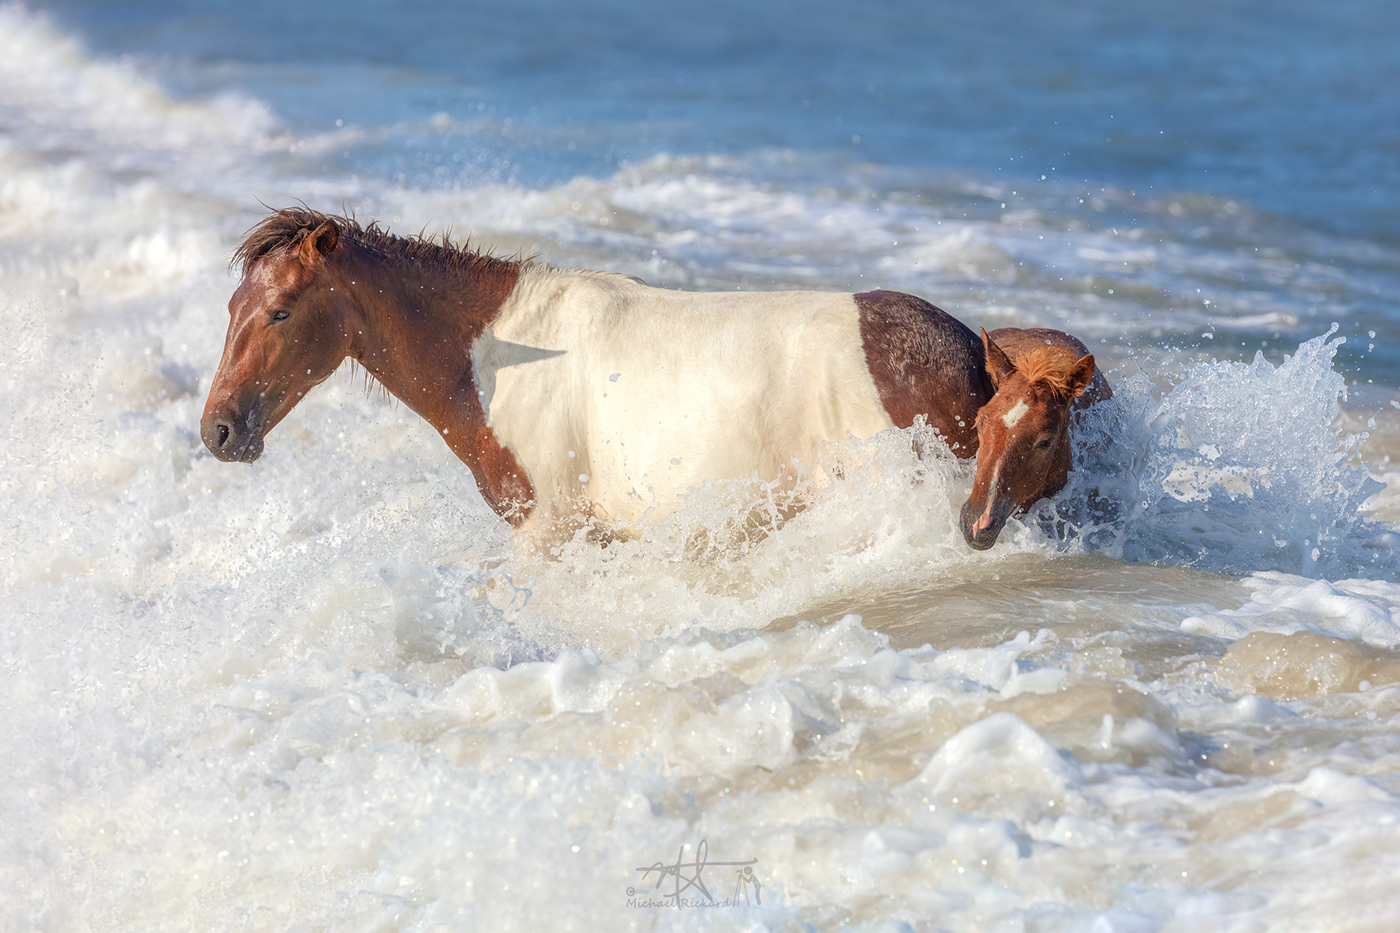 Assateague assateague island beach horses maryland national seashore Ocean seashore summer wild horses